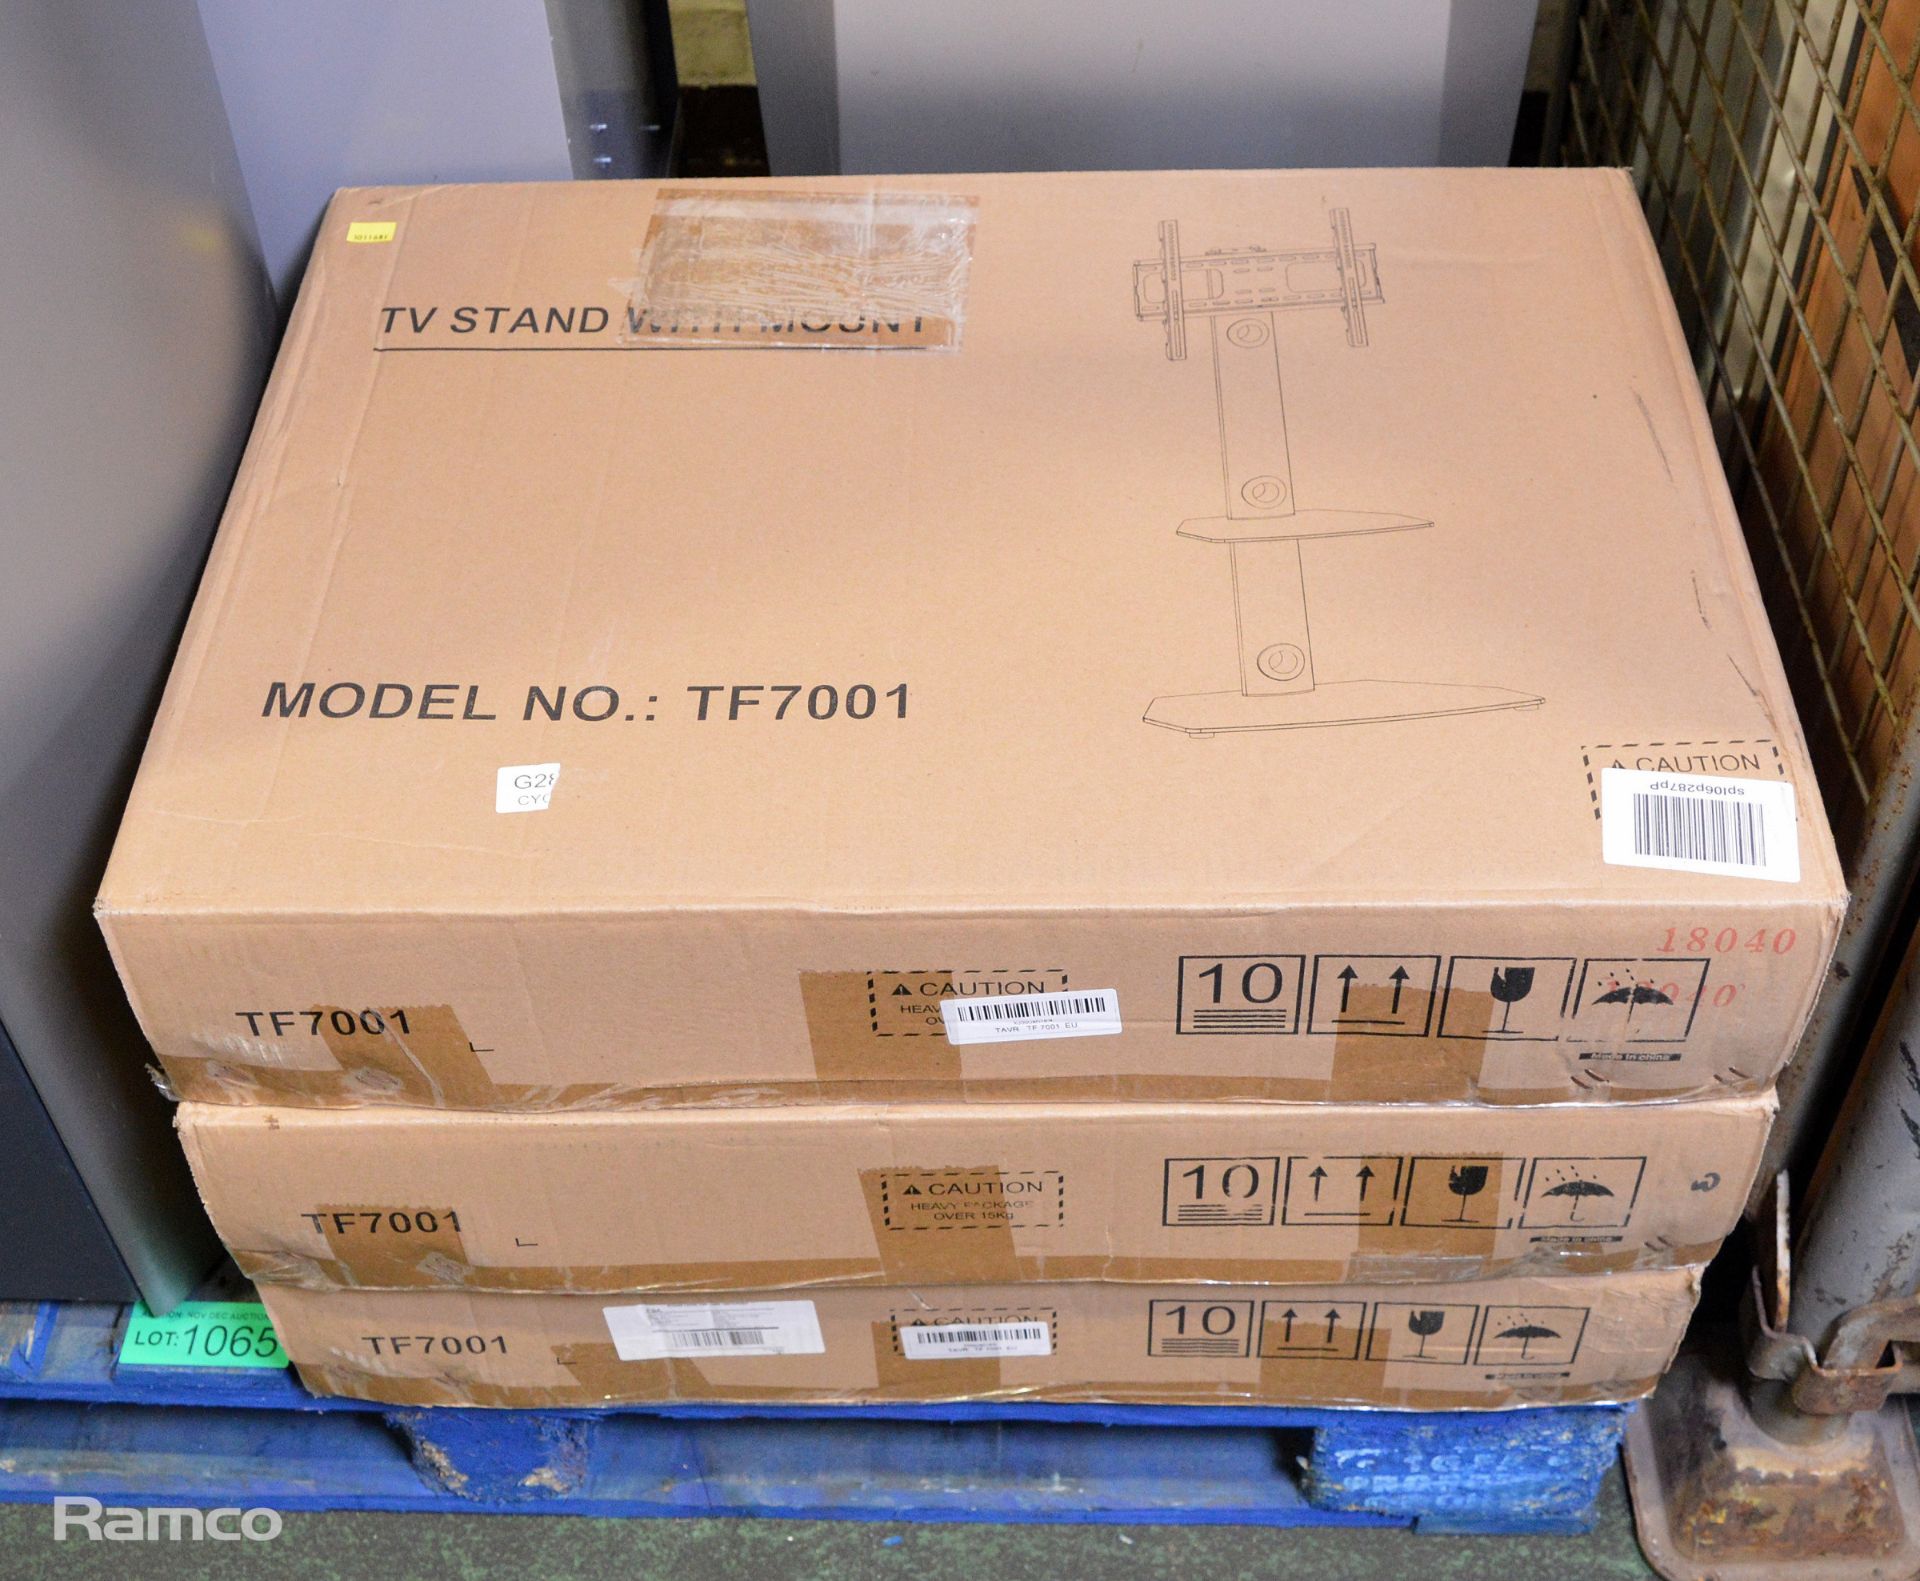 3x Tv Stand & Wall Mounts Model TF7001, Waterlogic WLMHCS3000 Water Dispenser 220/240V, Wa - Image 5 of 10